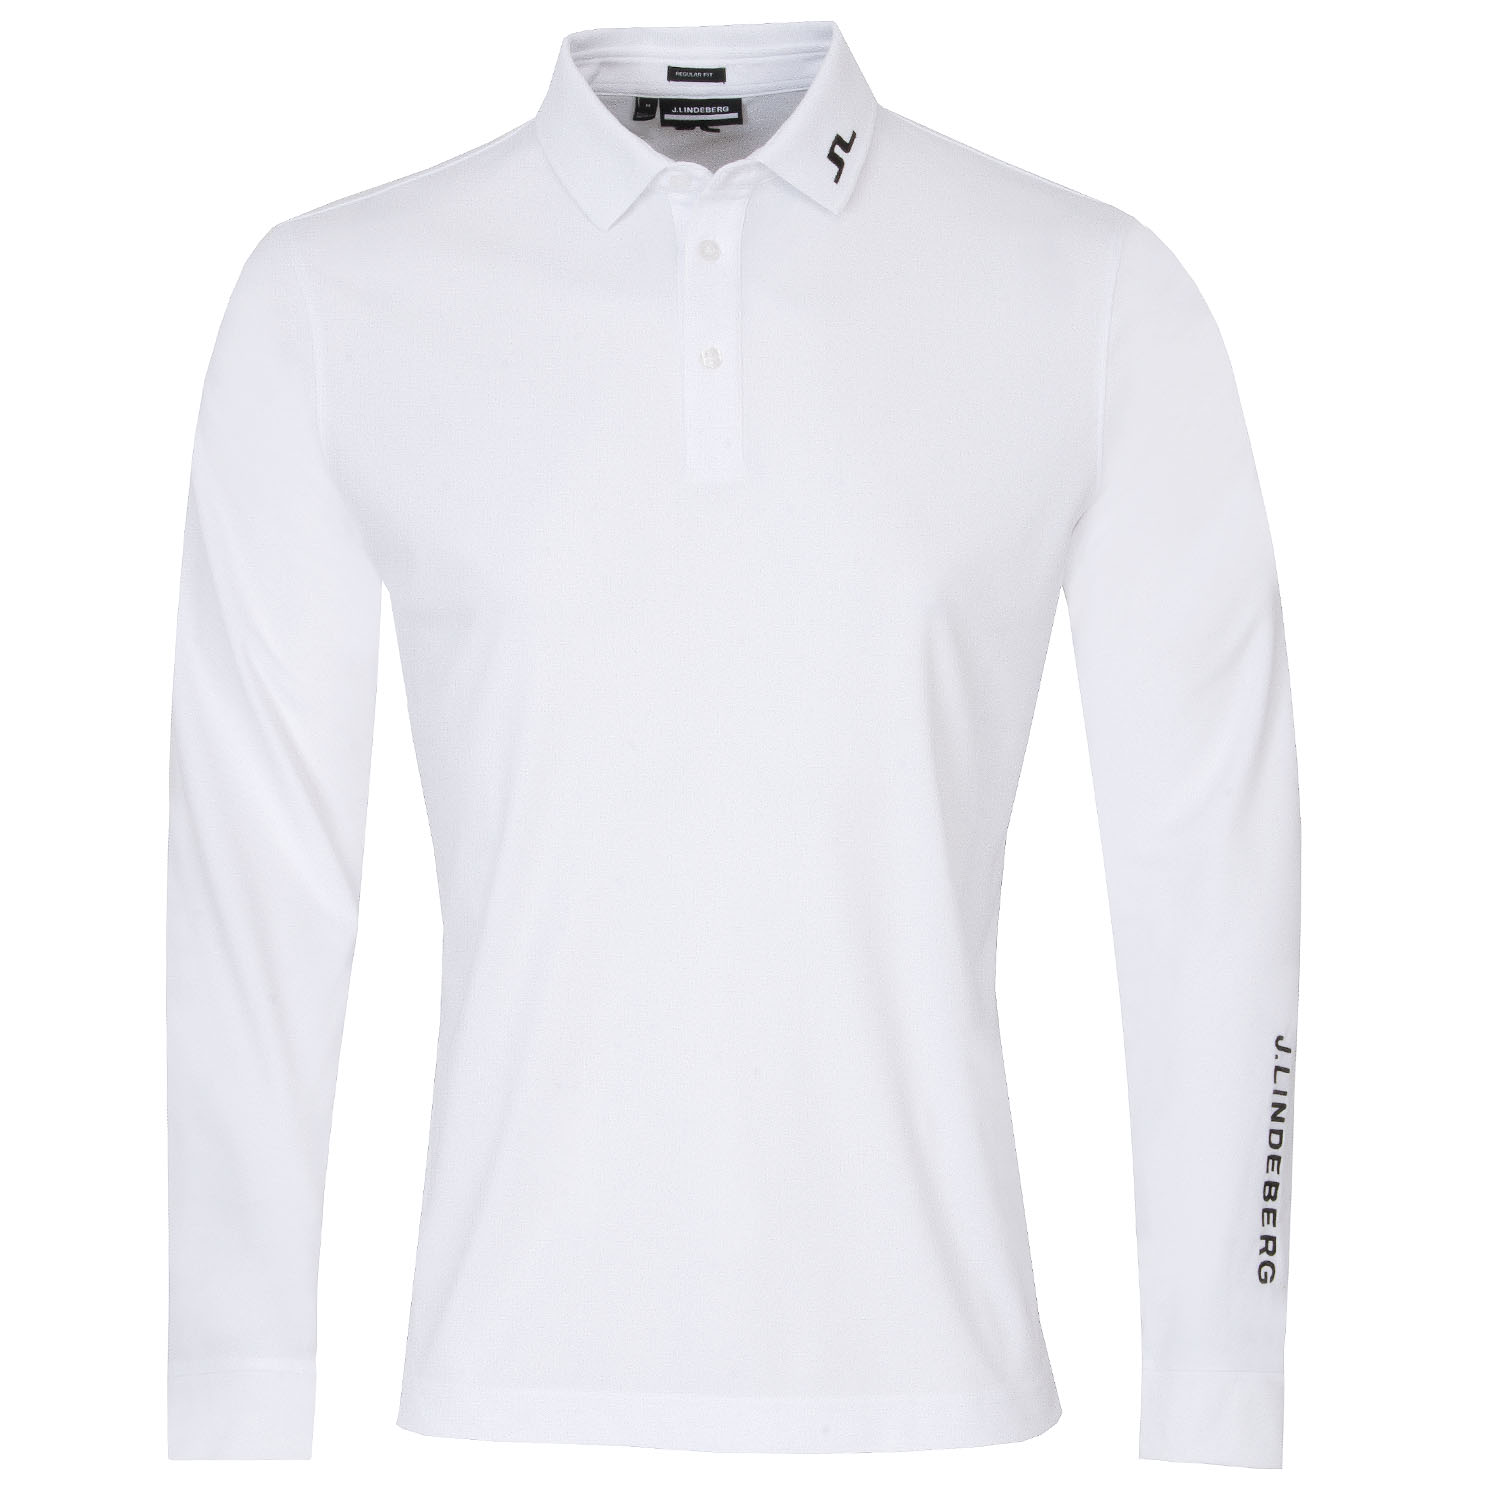 J Lindeberg Tour Tech Long Sleeve Polo Shirt